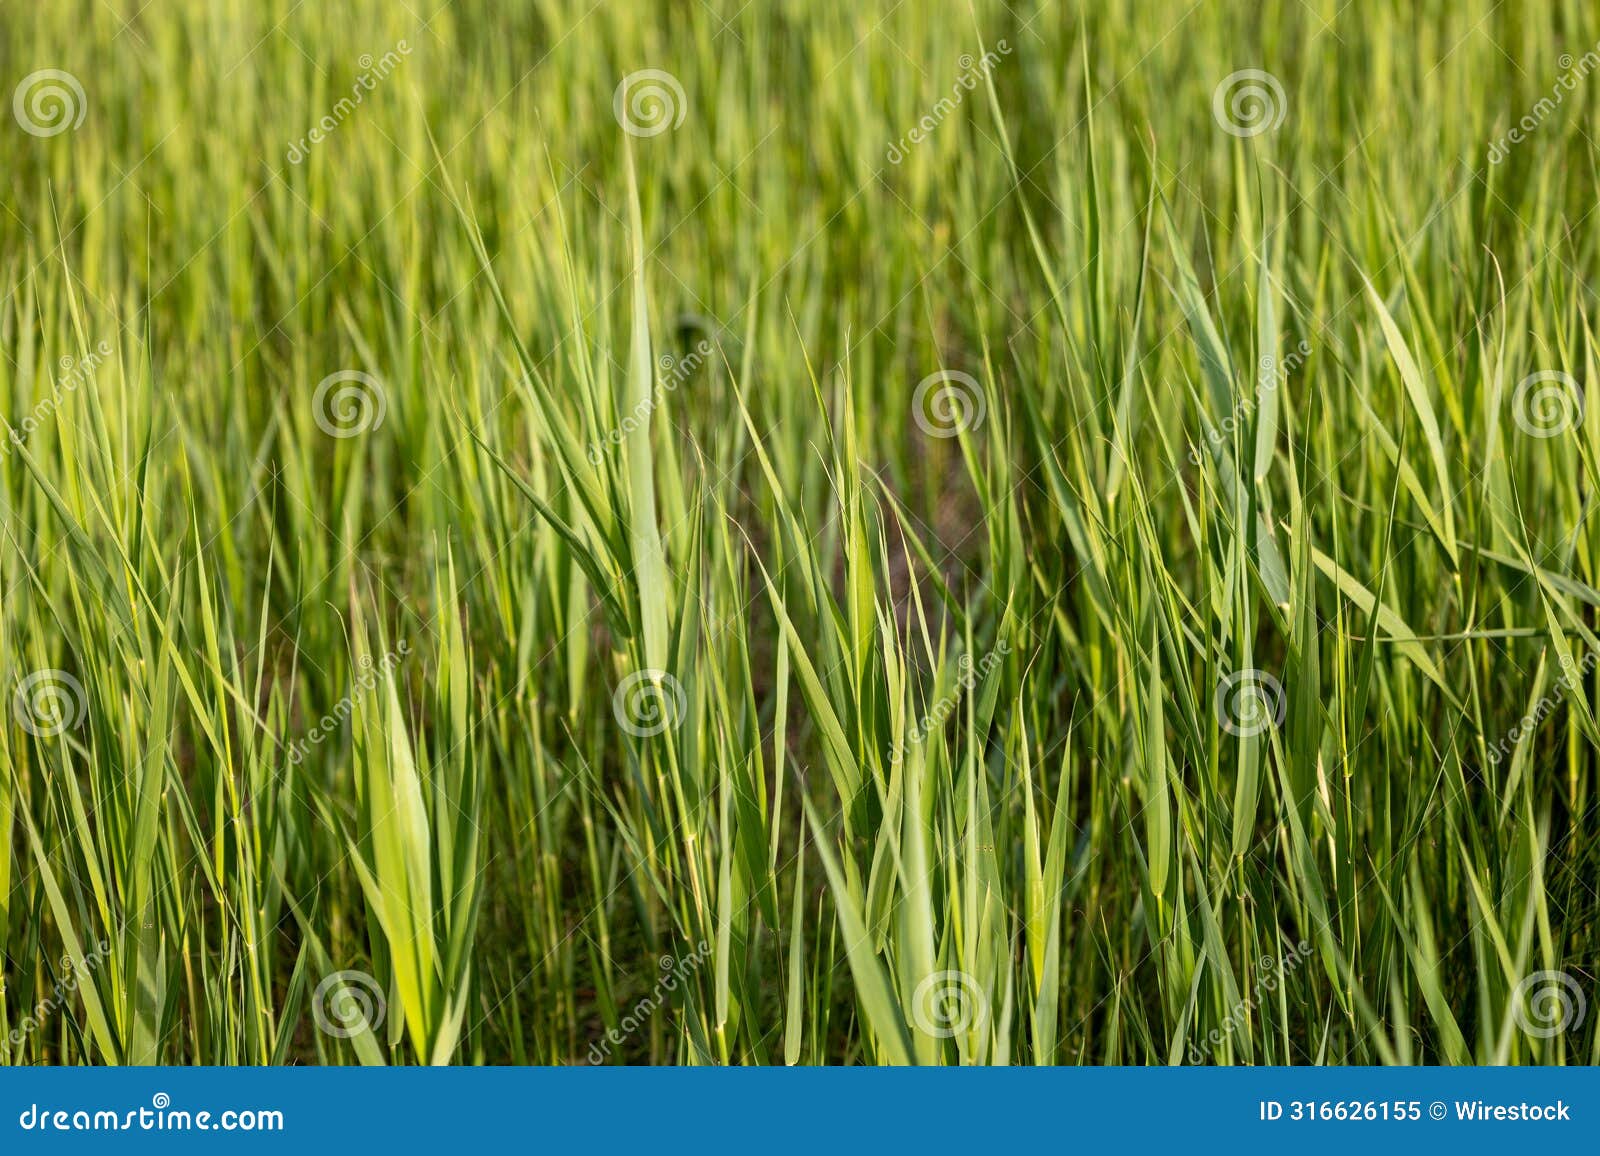 cat in tall green grass, exploring surroundings